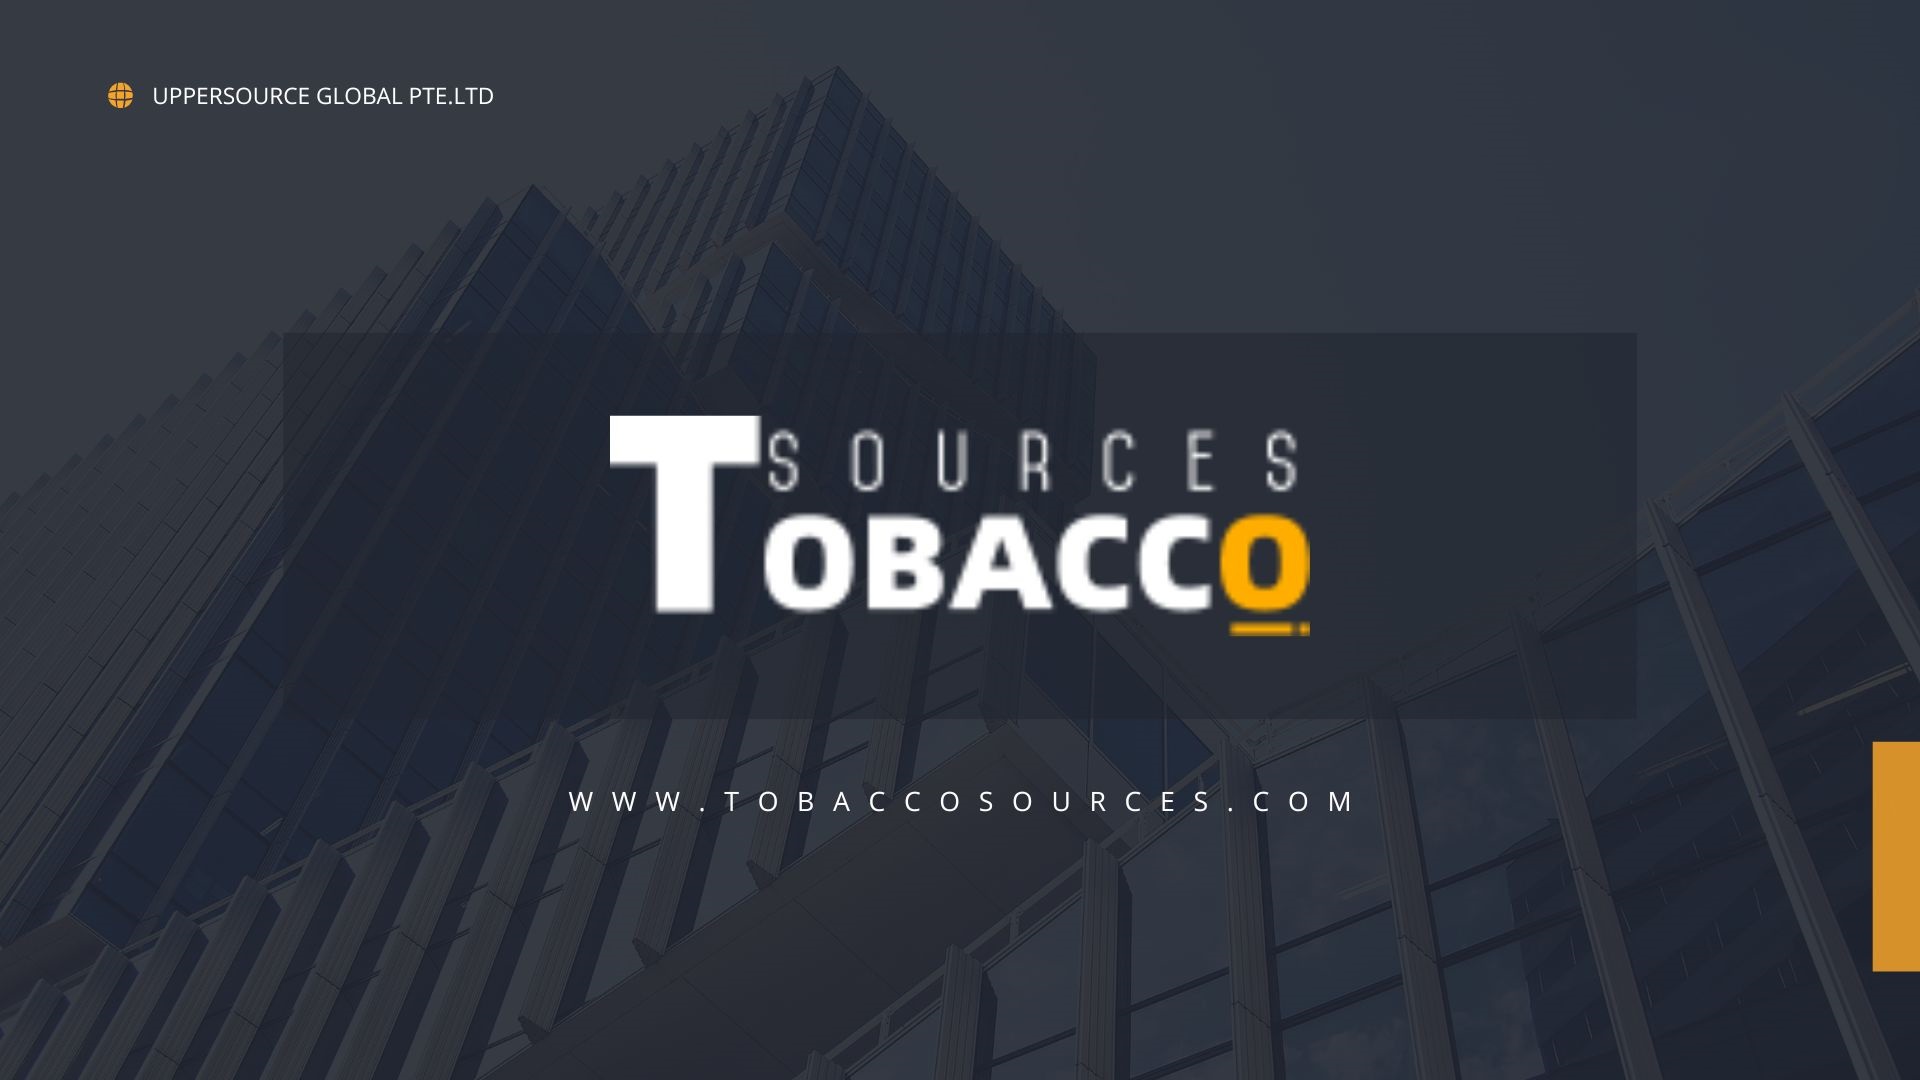 International Tobacco Trade Platform - Tobacco Sources